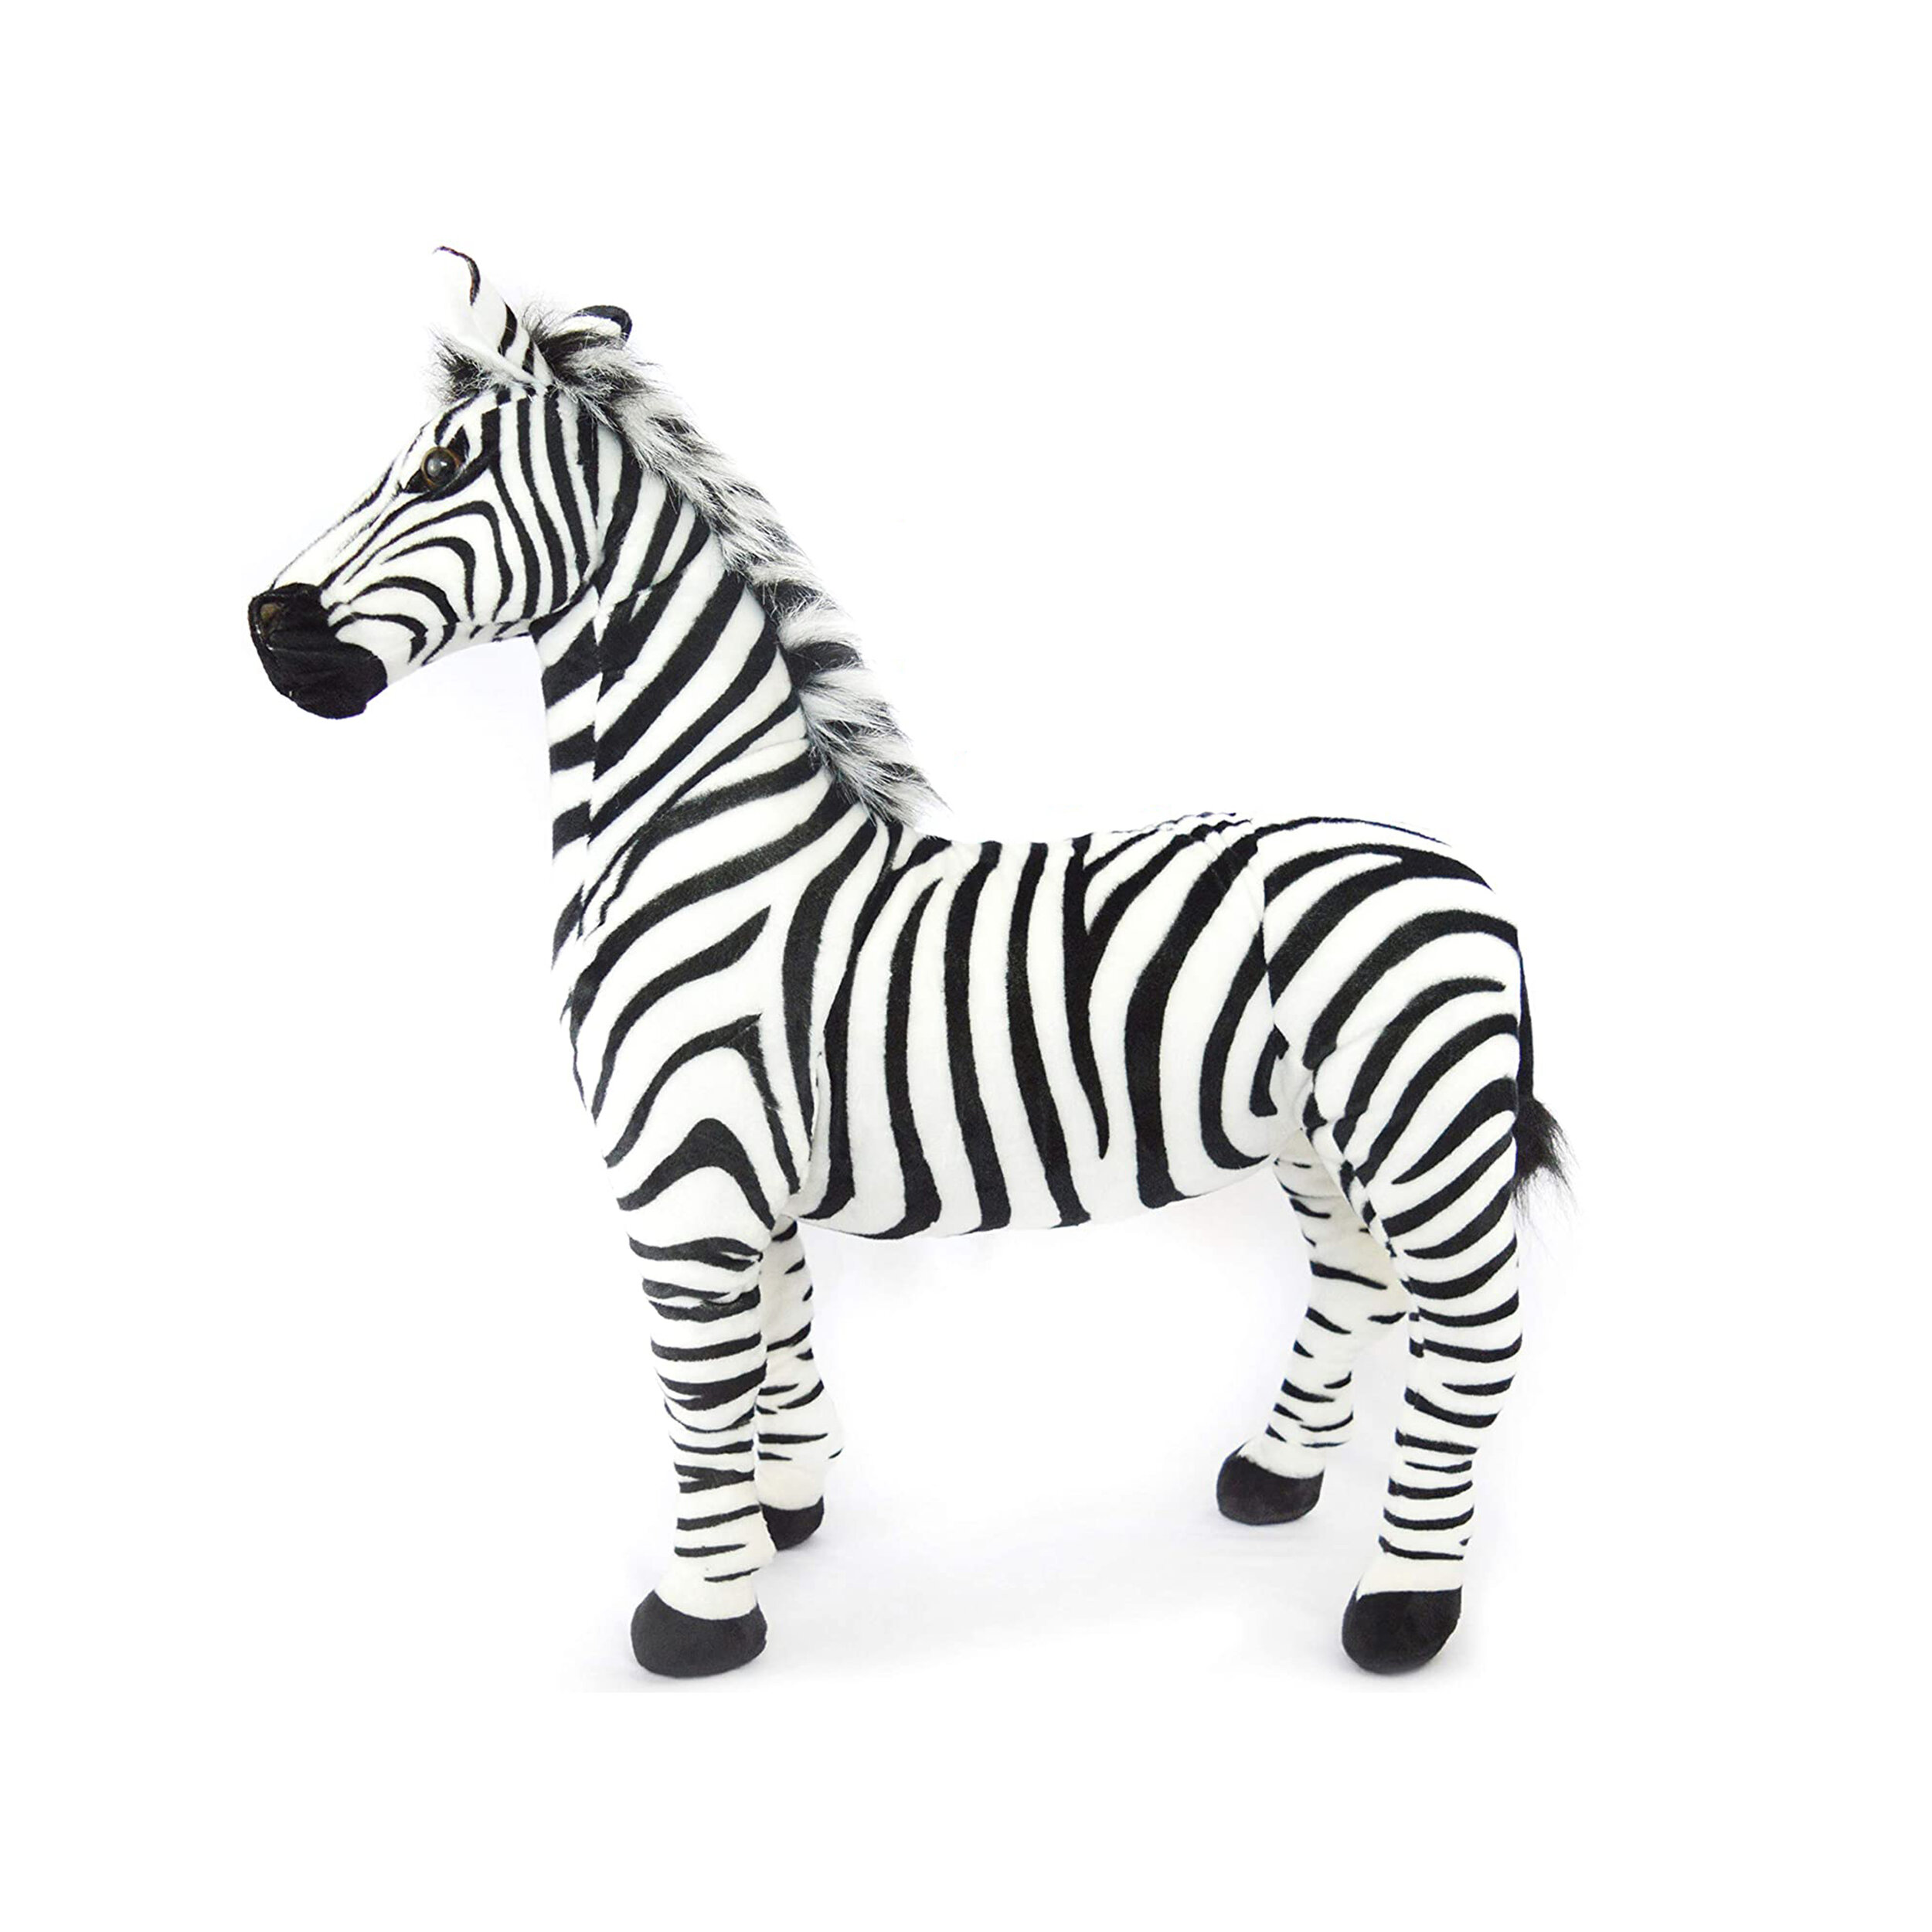 Zebra Side.jpg